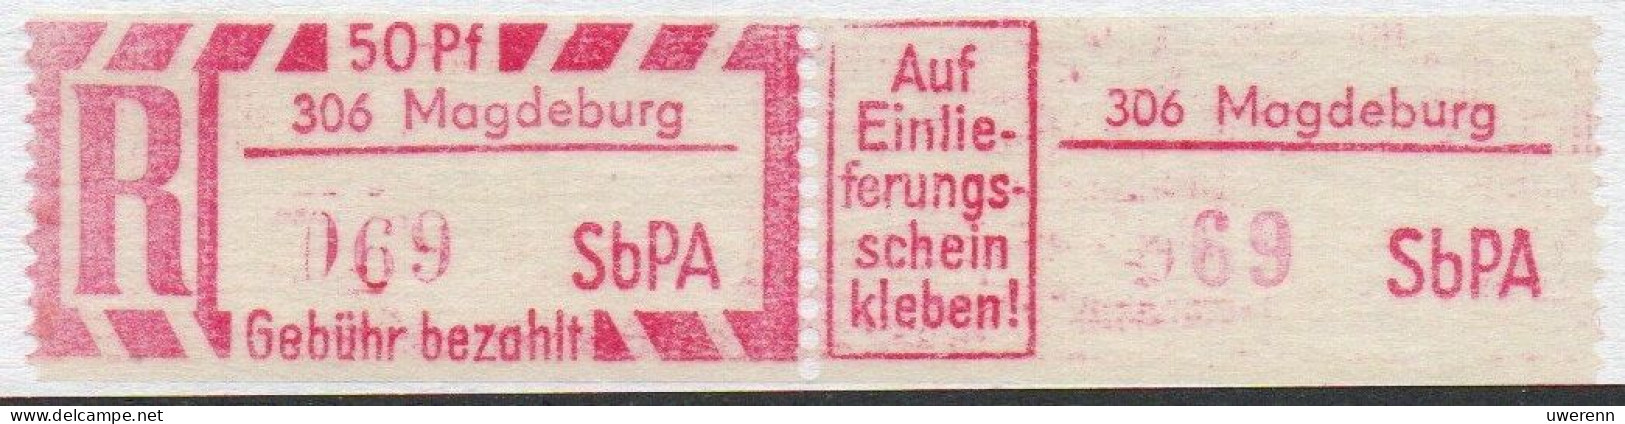 DDR Einschreibemarke Magdeburg SbPA Postfrisch, EM2B-306II(1) PU- RU(a) Zh - Aangetekende Etiketten